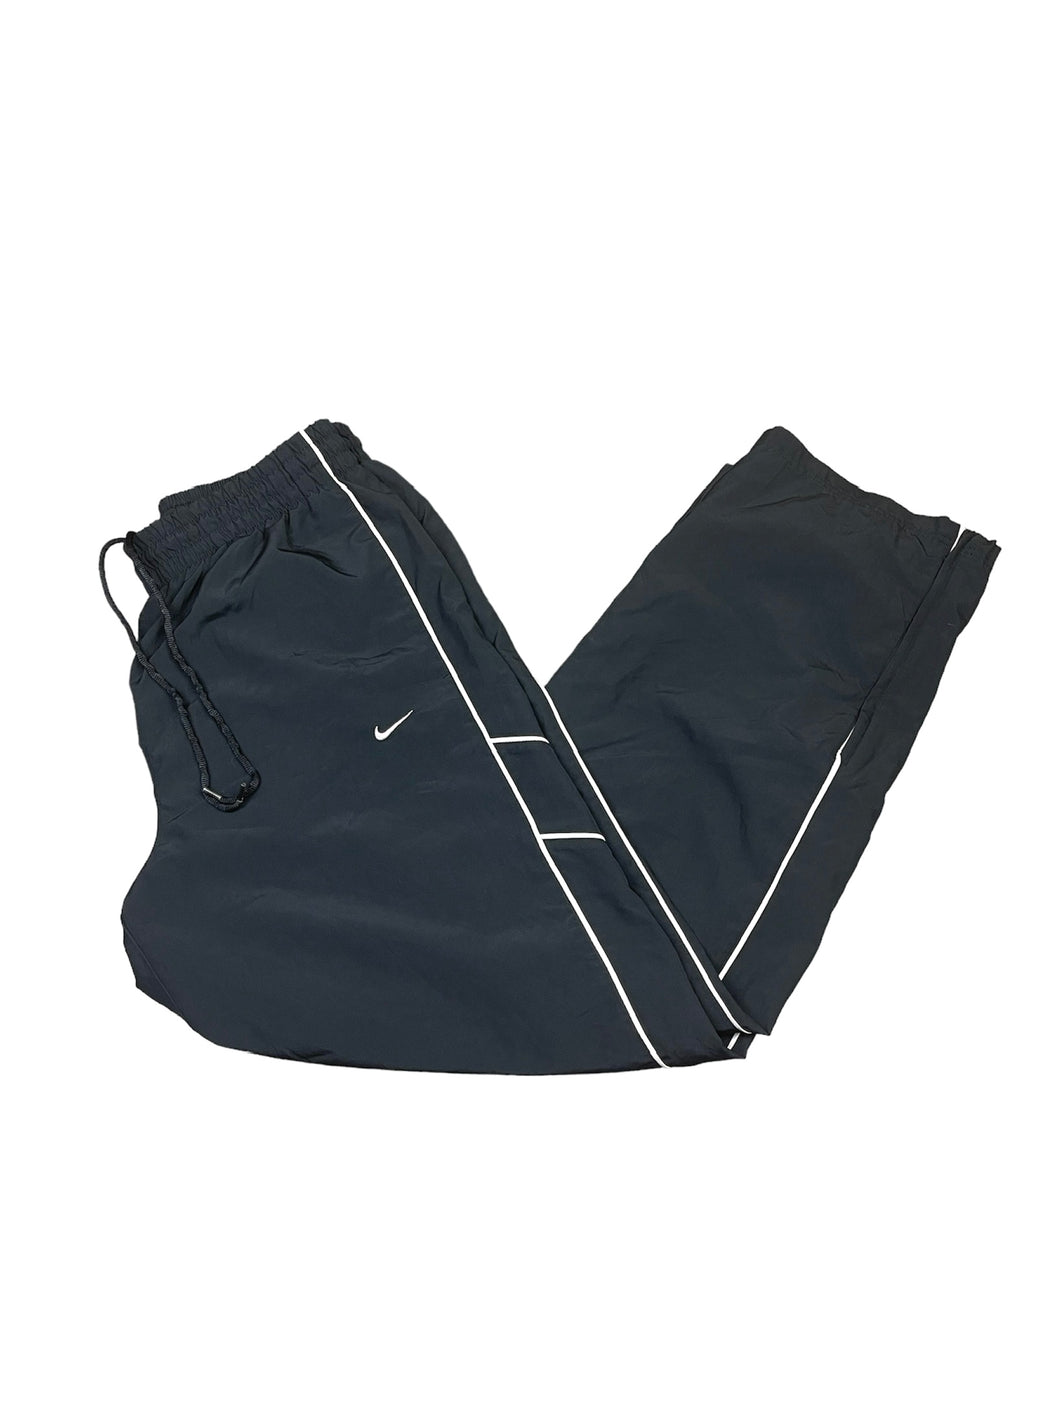 Nike Baggy Pant - Large